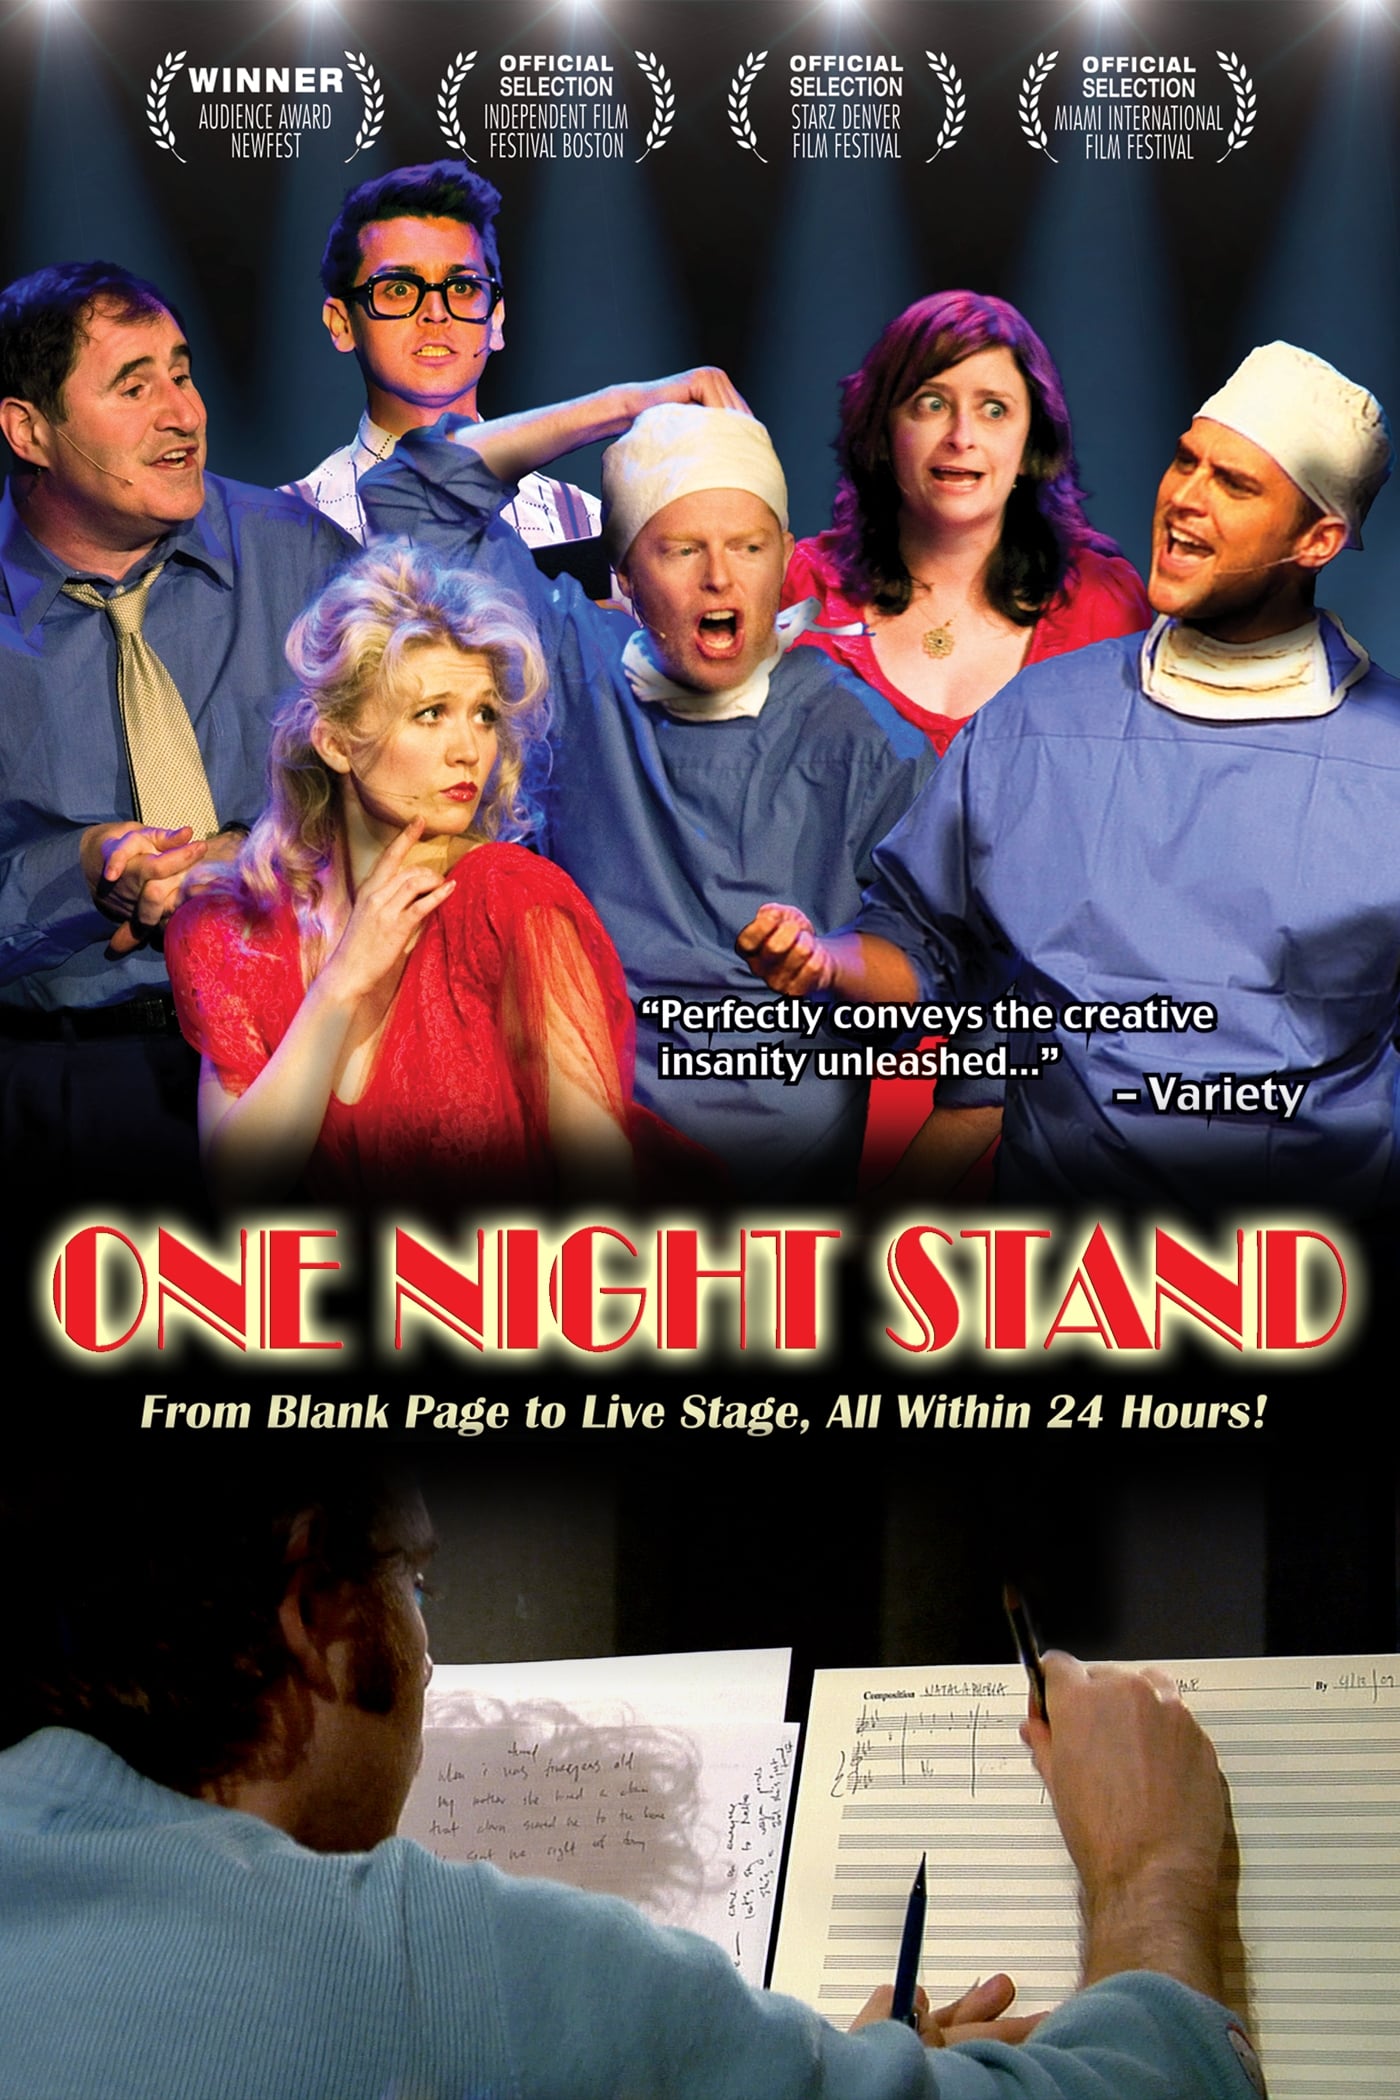 One Night Stand (2013)